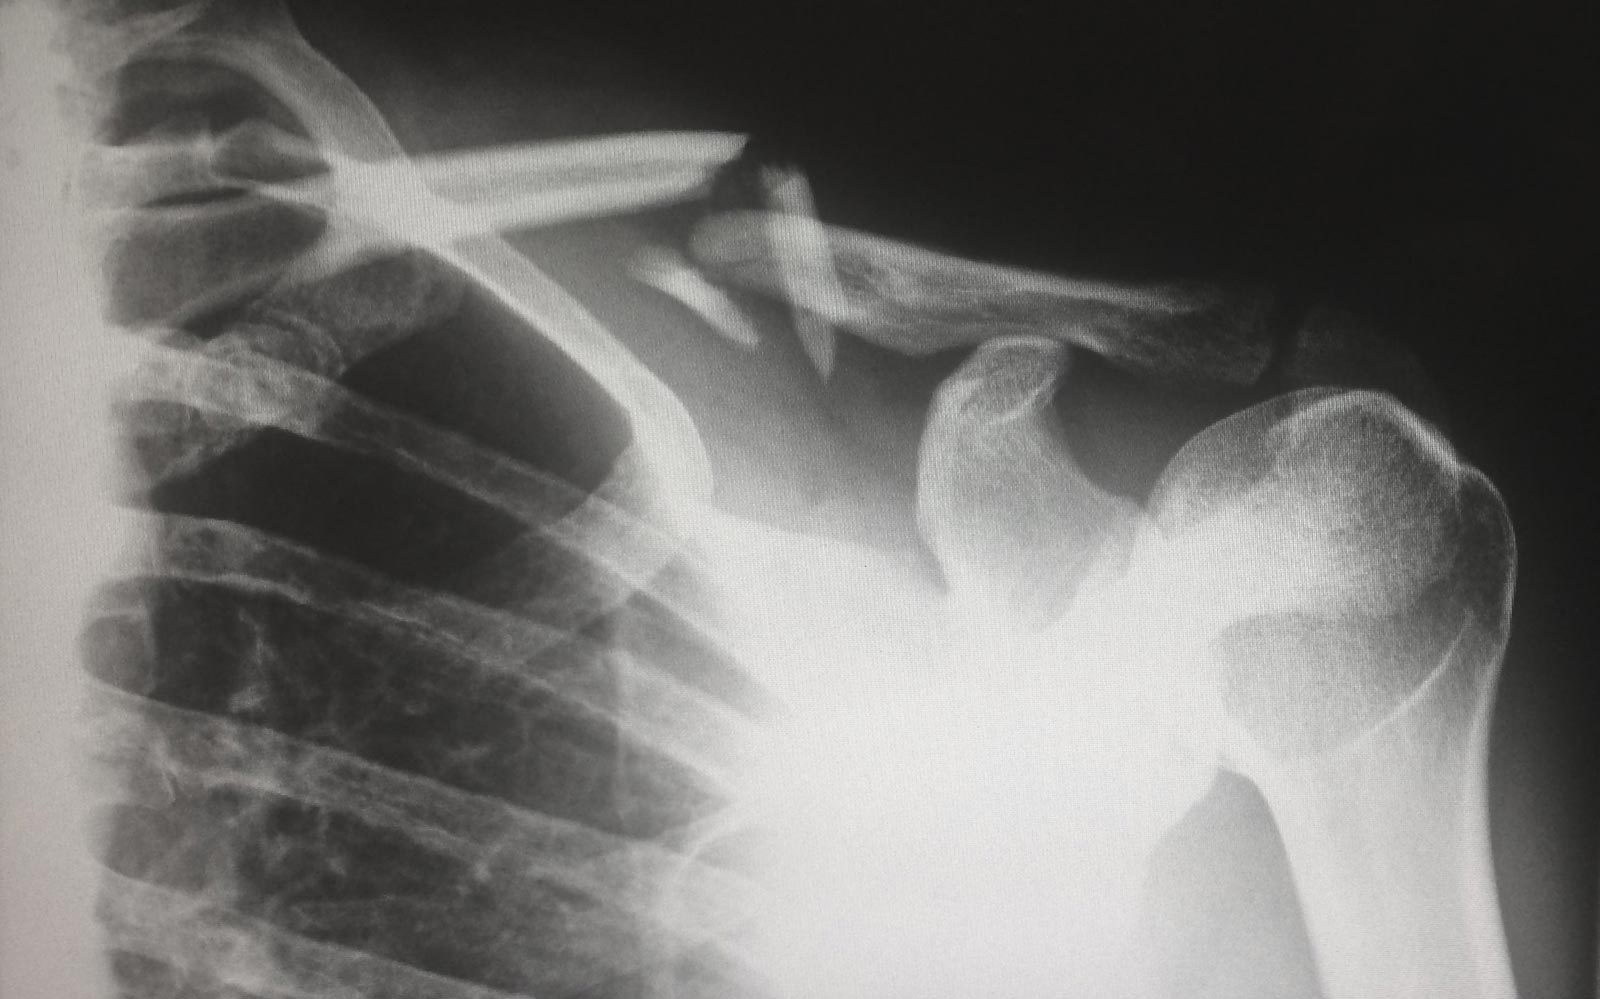 Shoulder X-ray